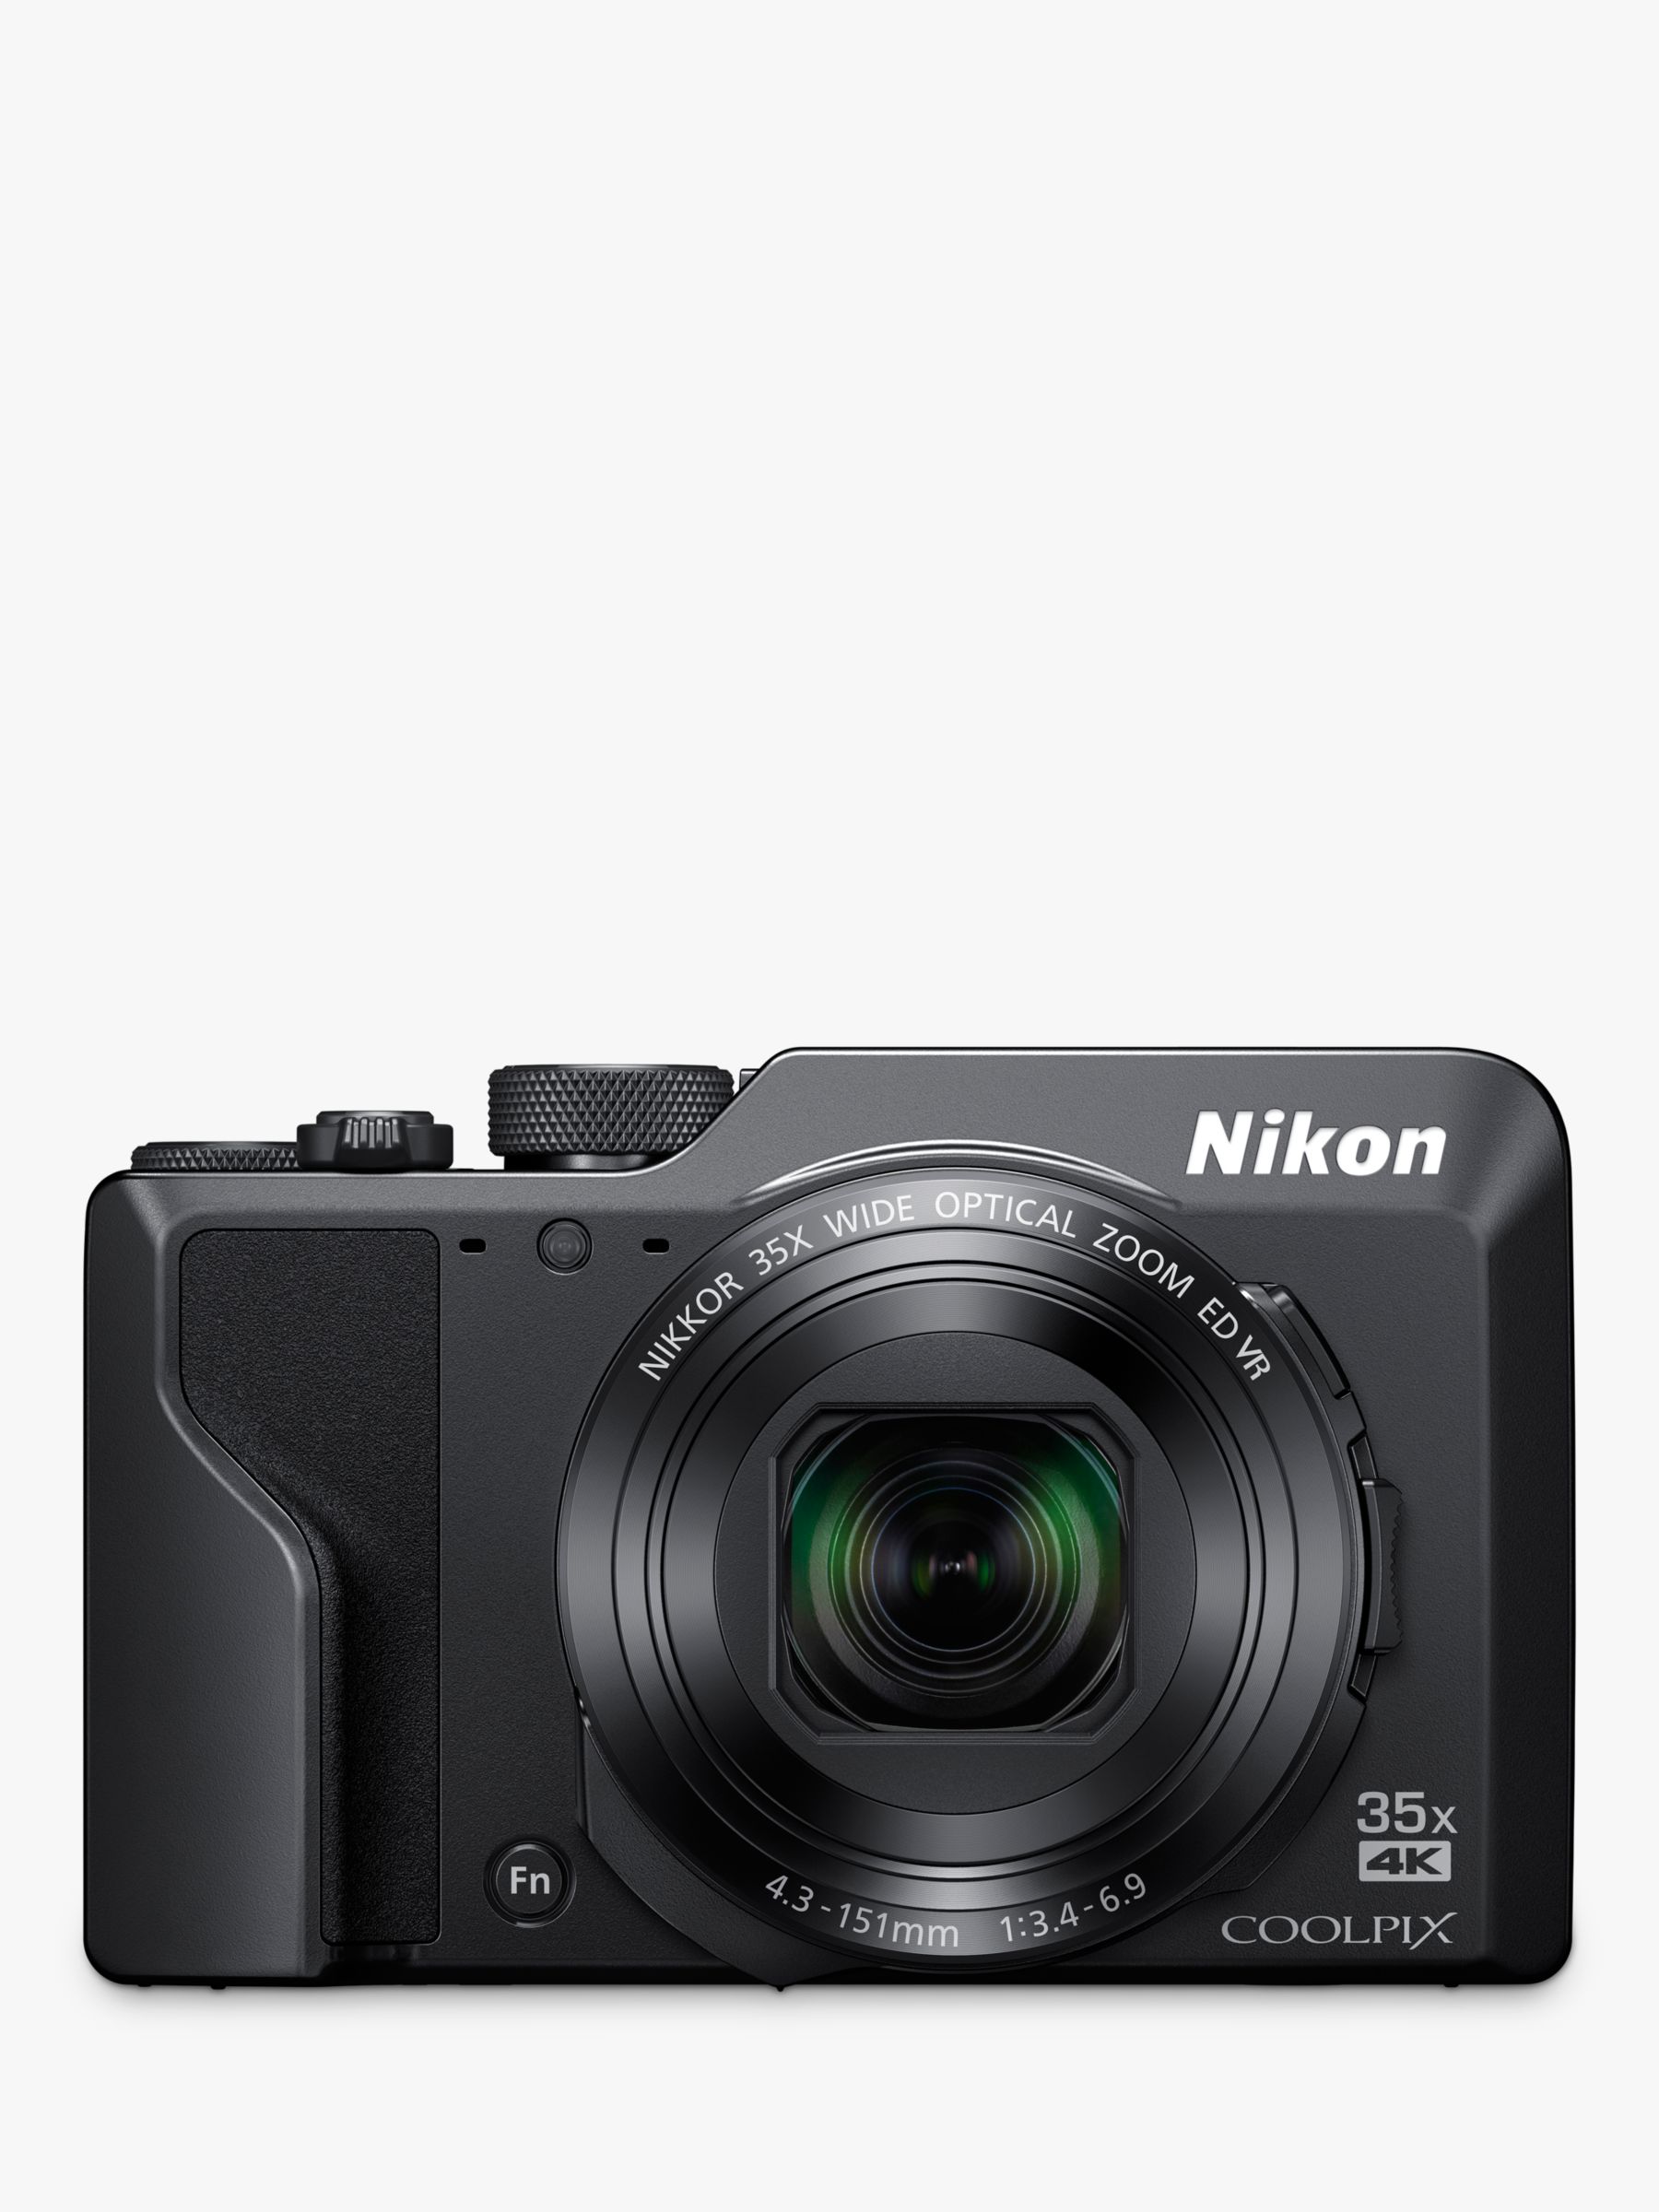 Nikon COOLPIX A1000 Digital Camera, 16MP, 4K Ultra HD, 35x Optical Zoom, Wi-Fi, Bluetooth, 3 Tiltable LCD Touch Screen